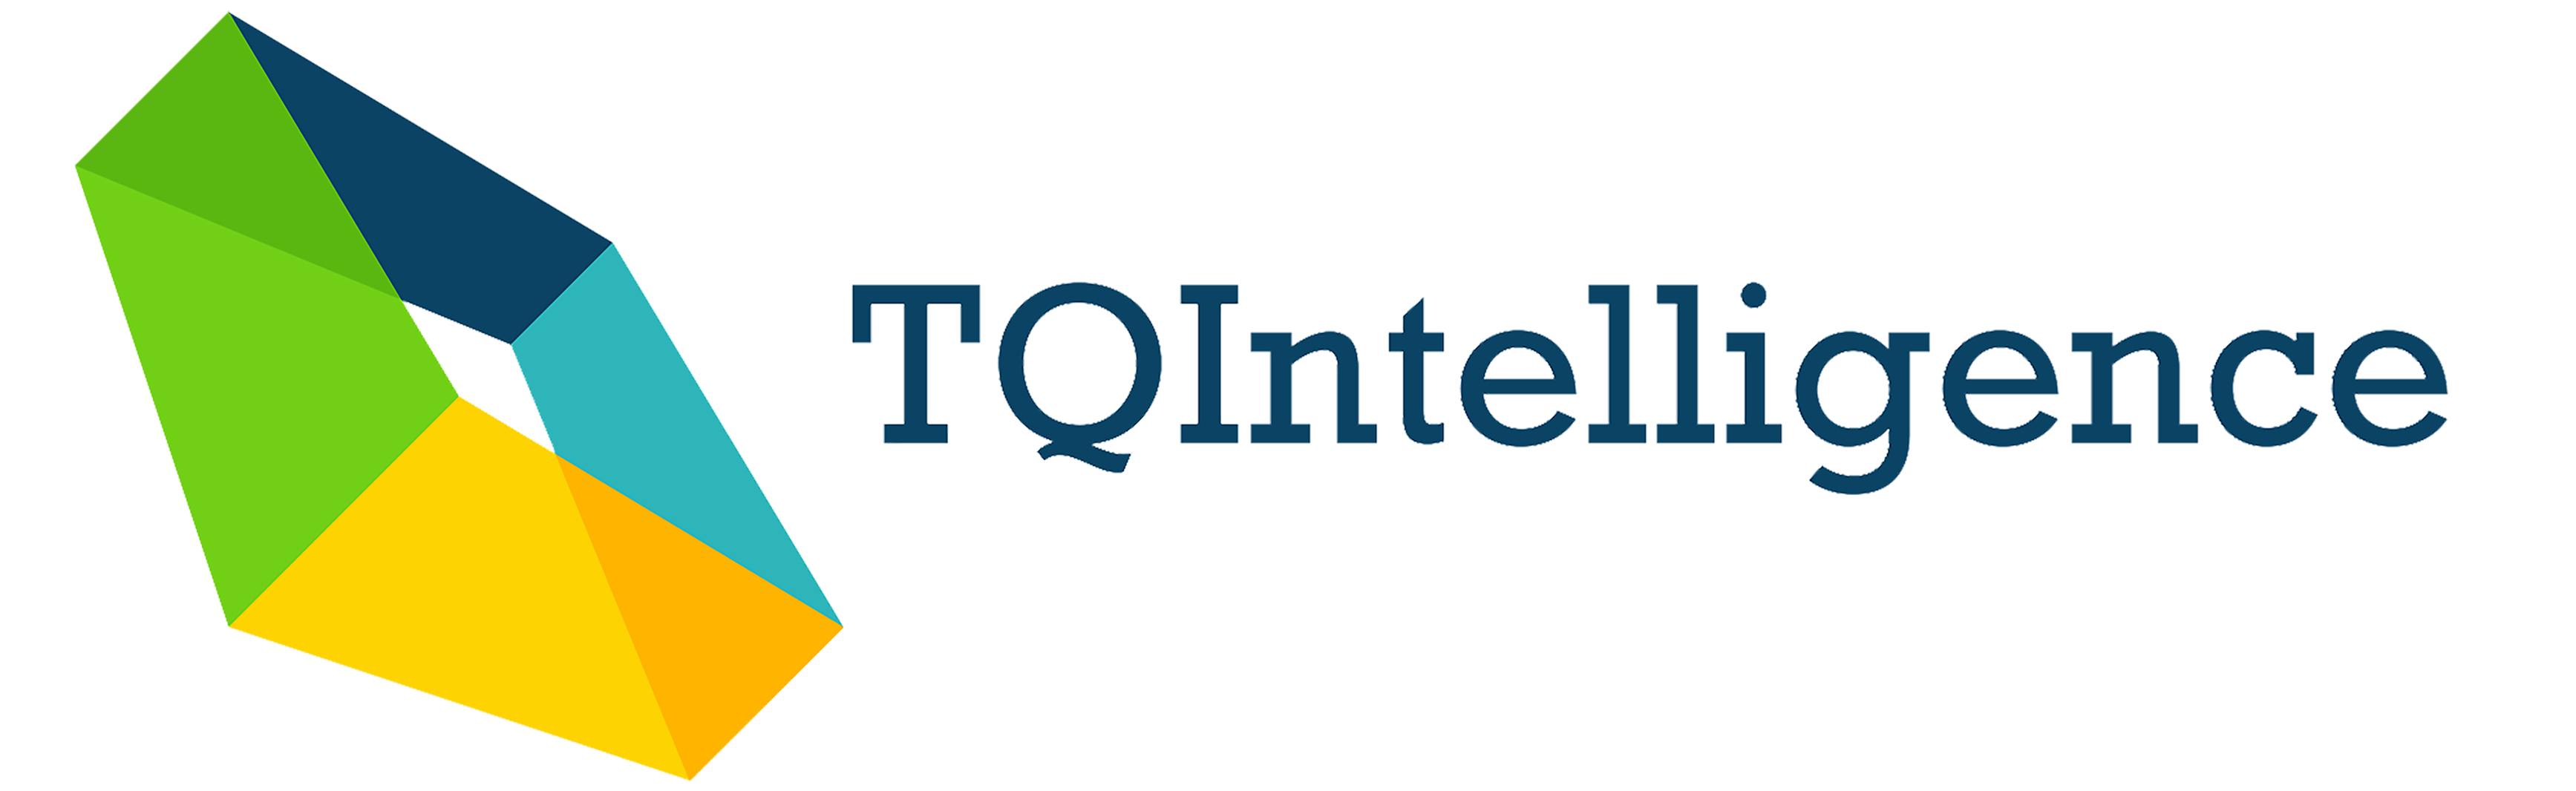 tq intelligence logo